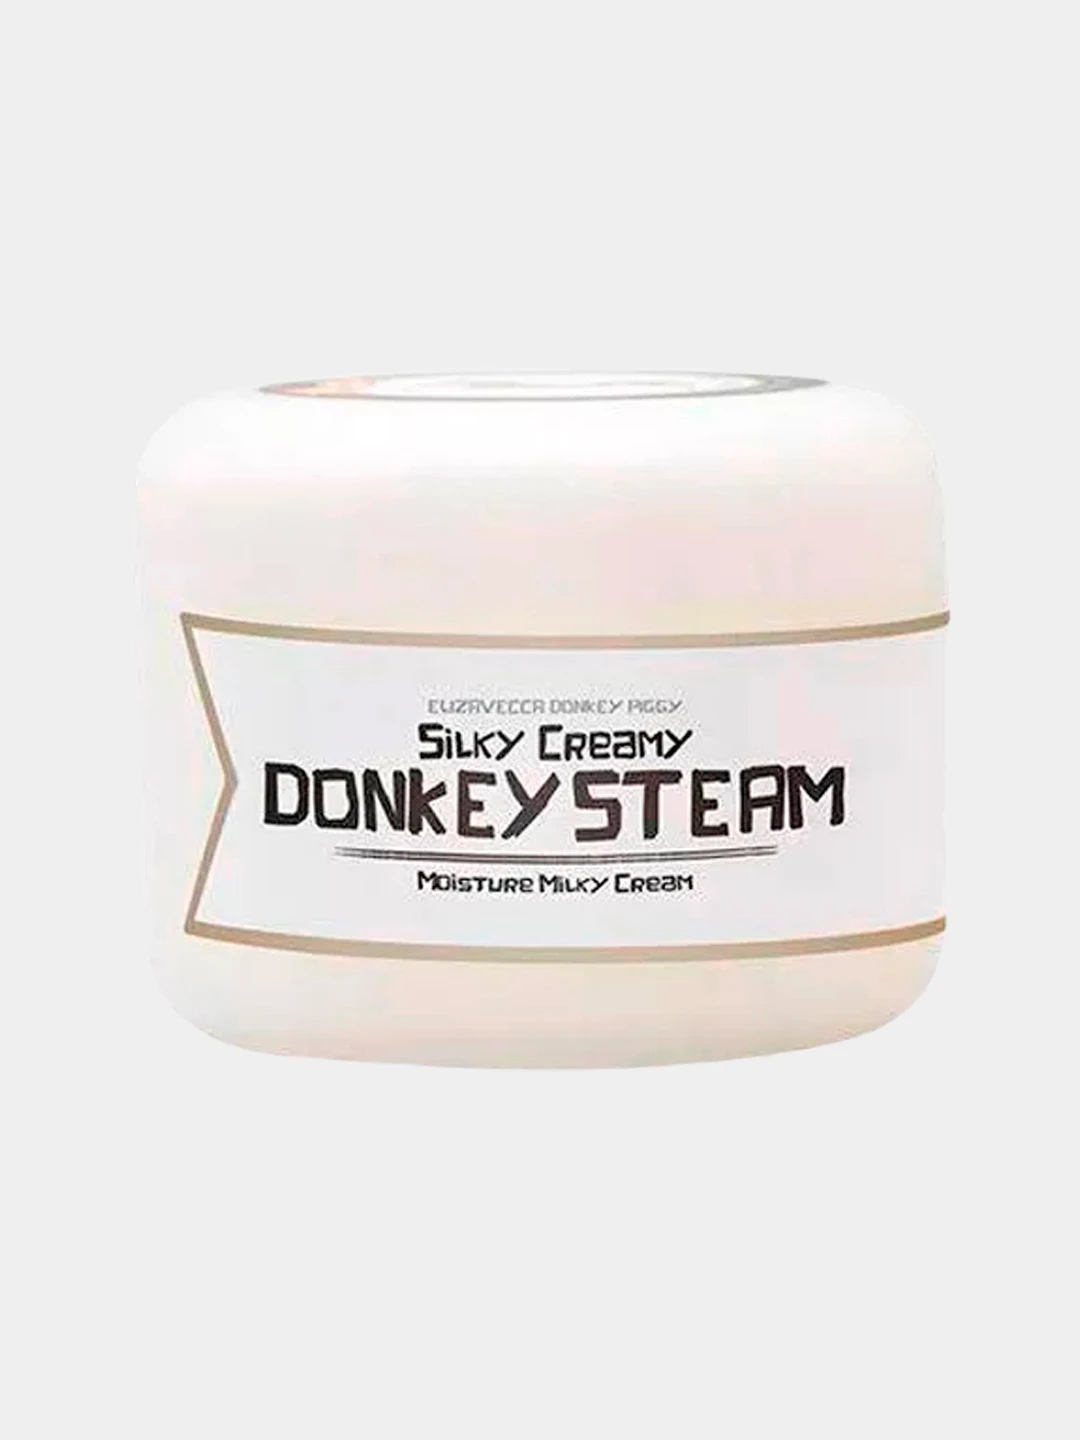 Silky cream donkey steam moisture milky cream фото 110